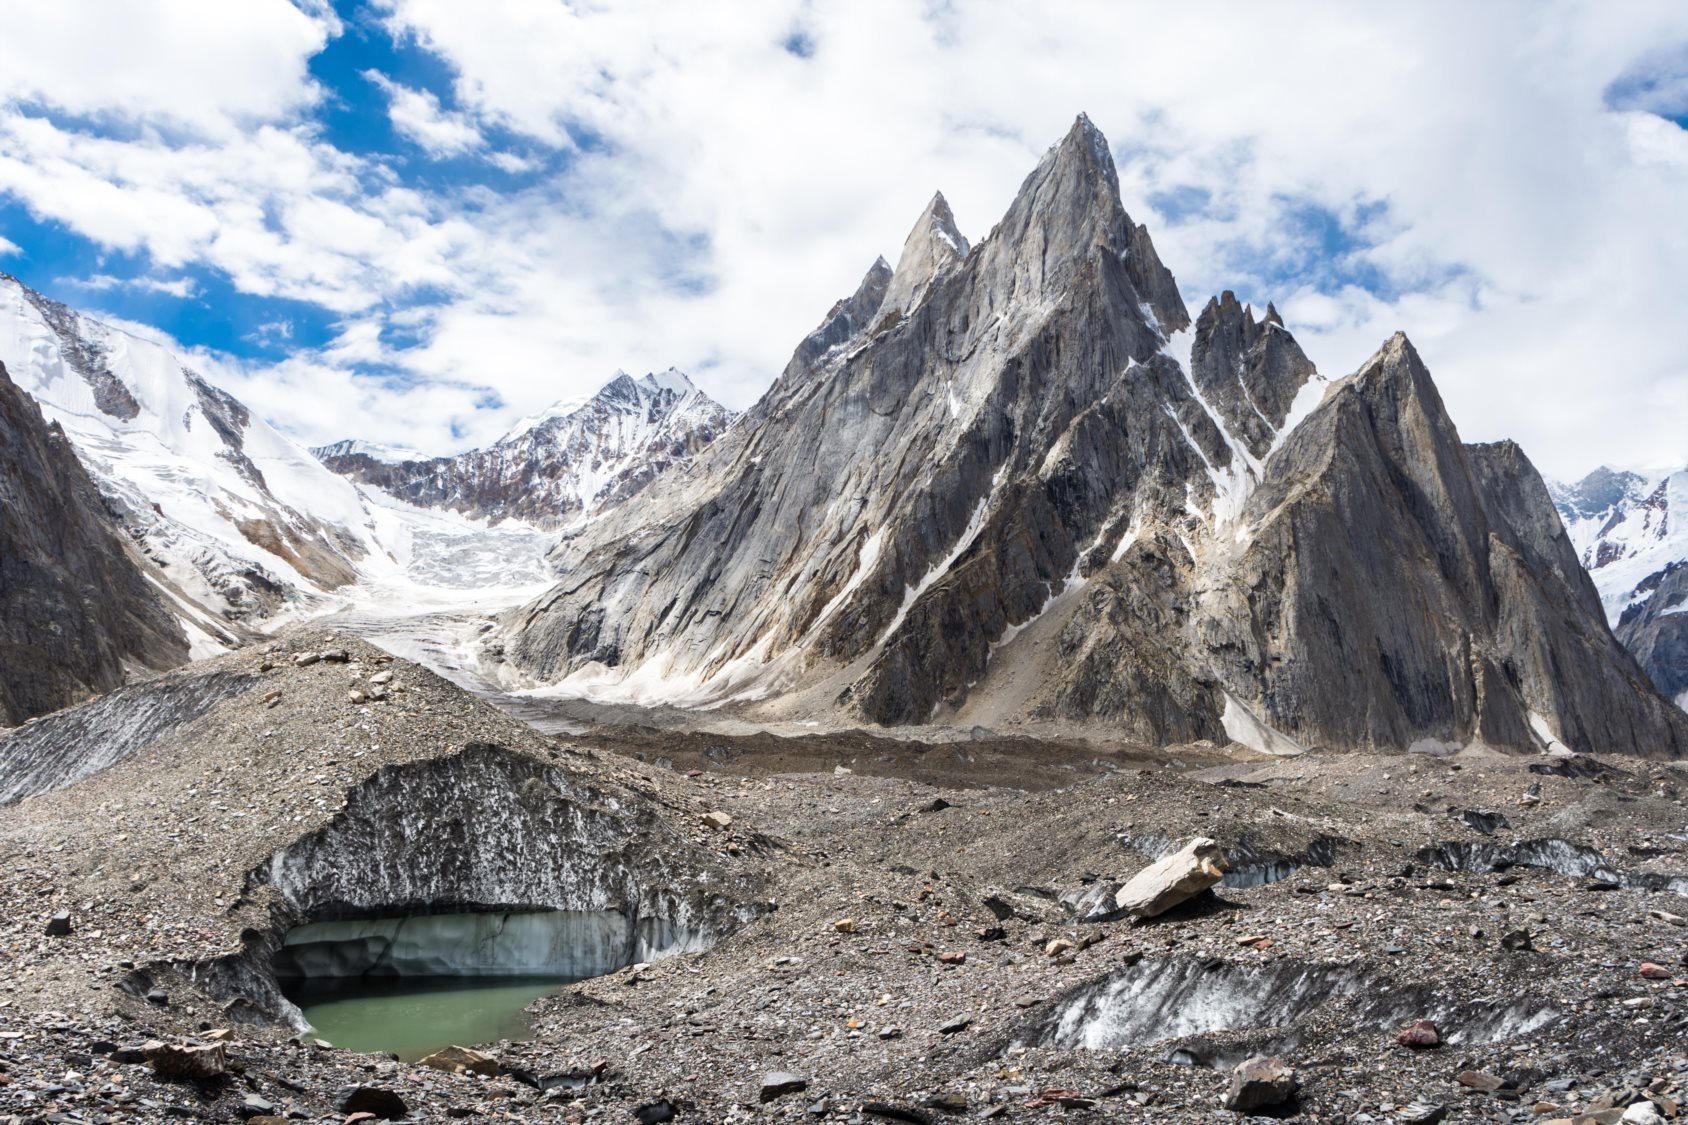 Baltoro glacier in Pakistan, Nuding pyramids